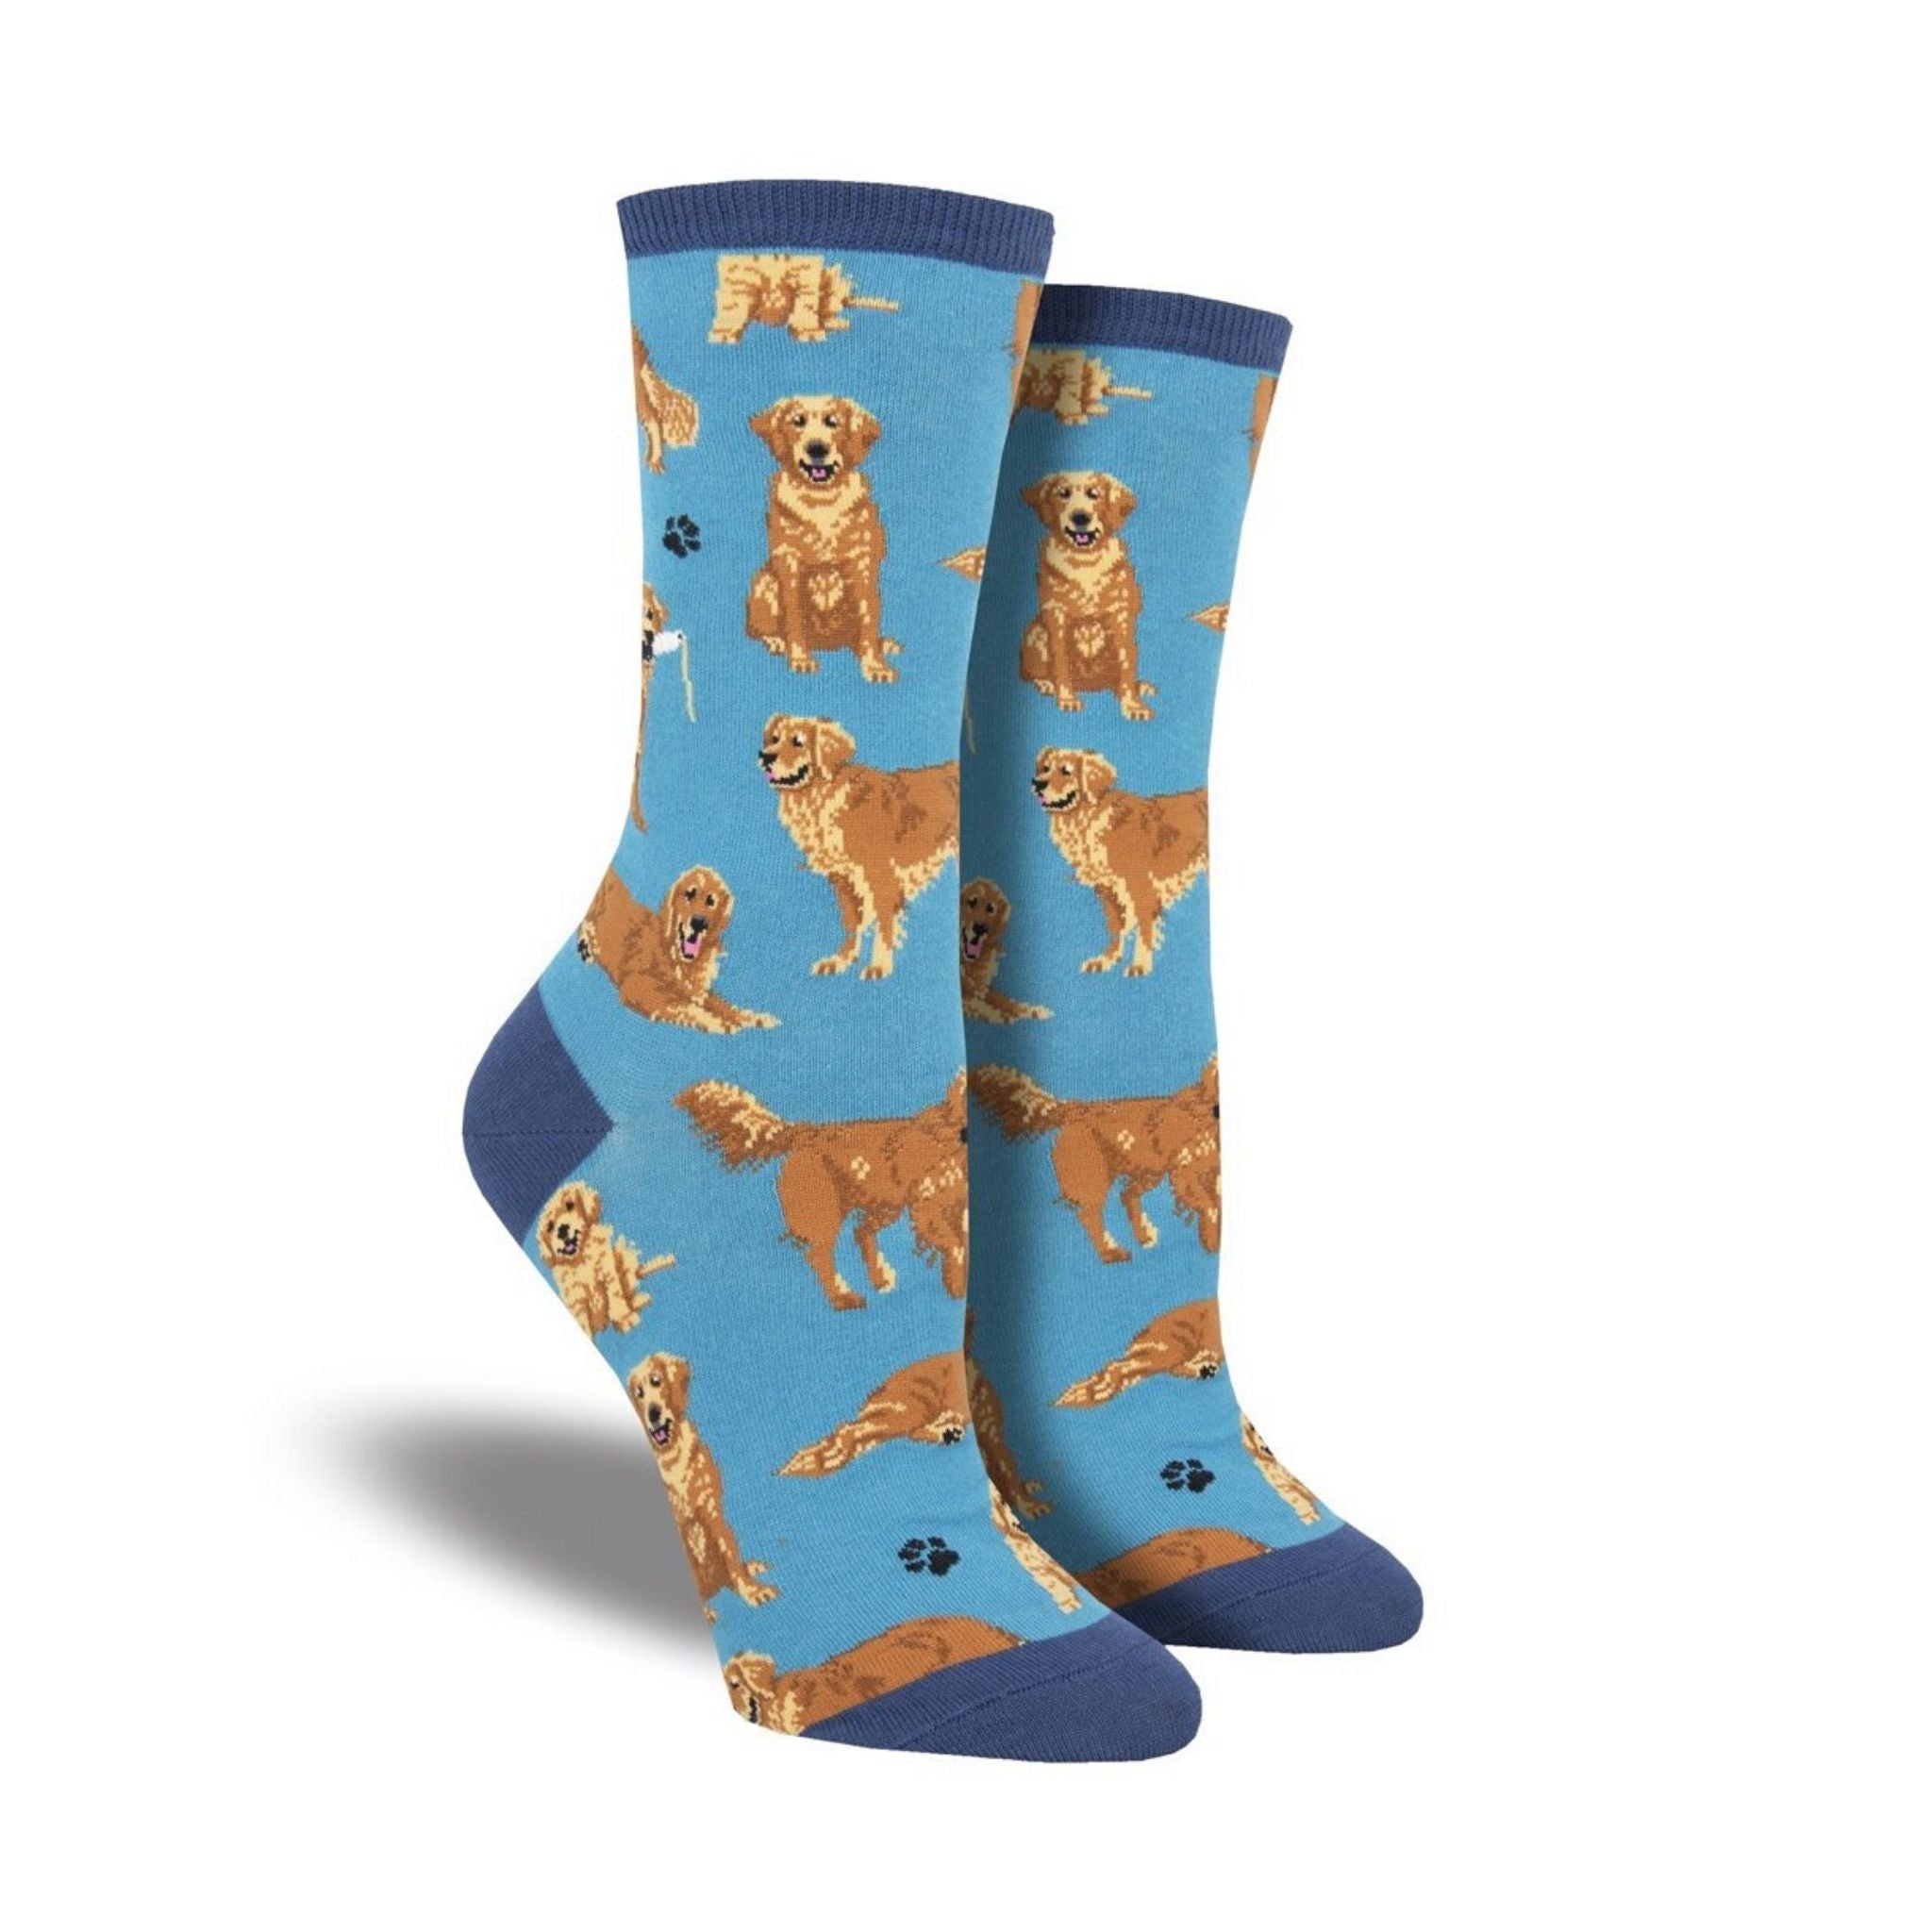 Blue socks with golden retrievers on them